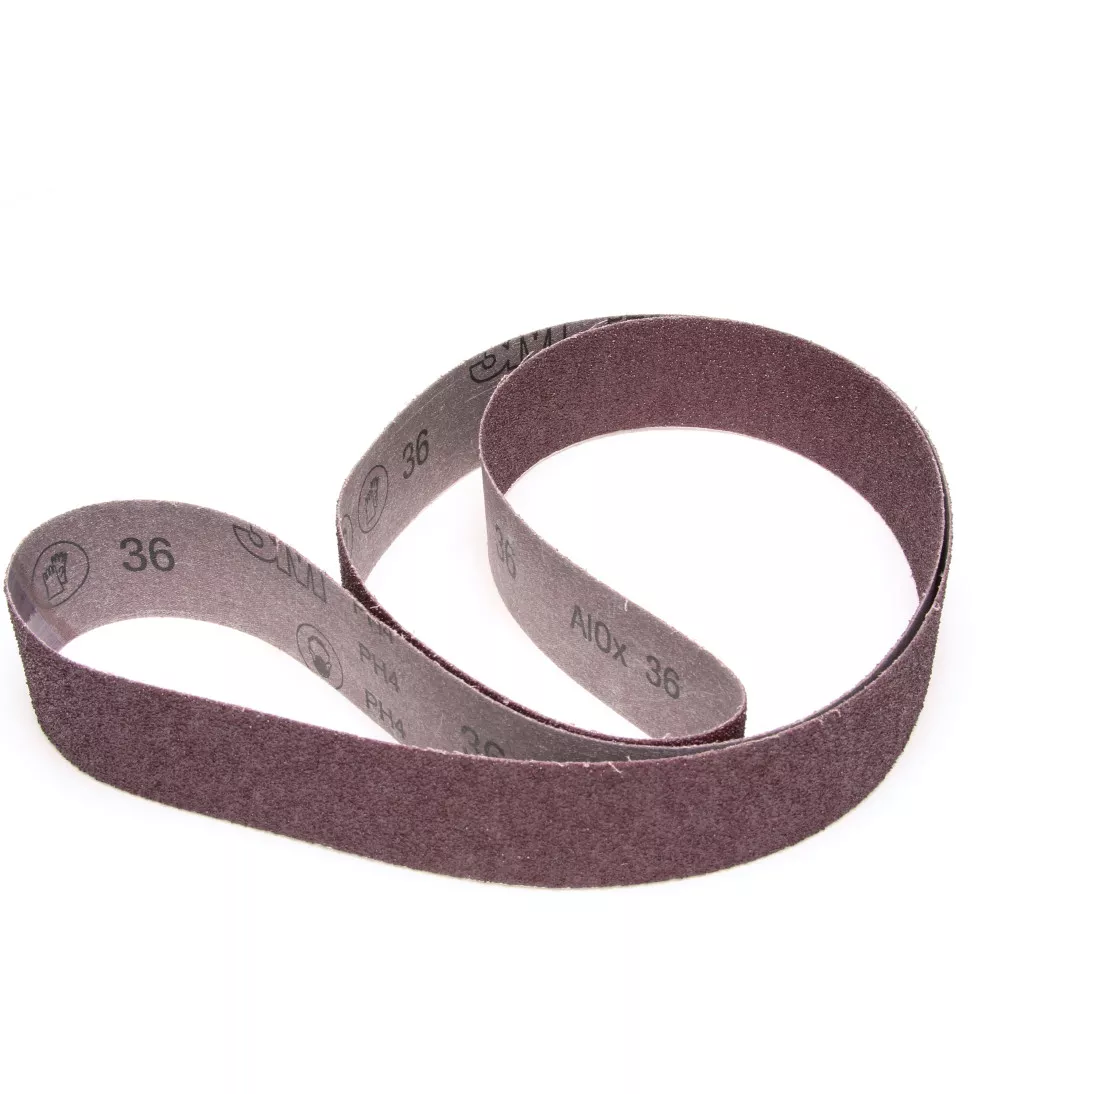 3M™ Cloth Belt 341D, 36 X-weight, 2 in x 72 in, Film-lok, Single-flex,
50 ea/Case